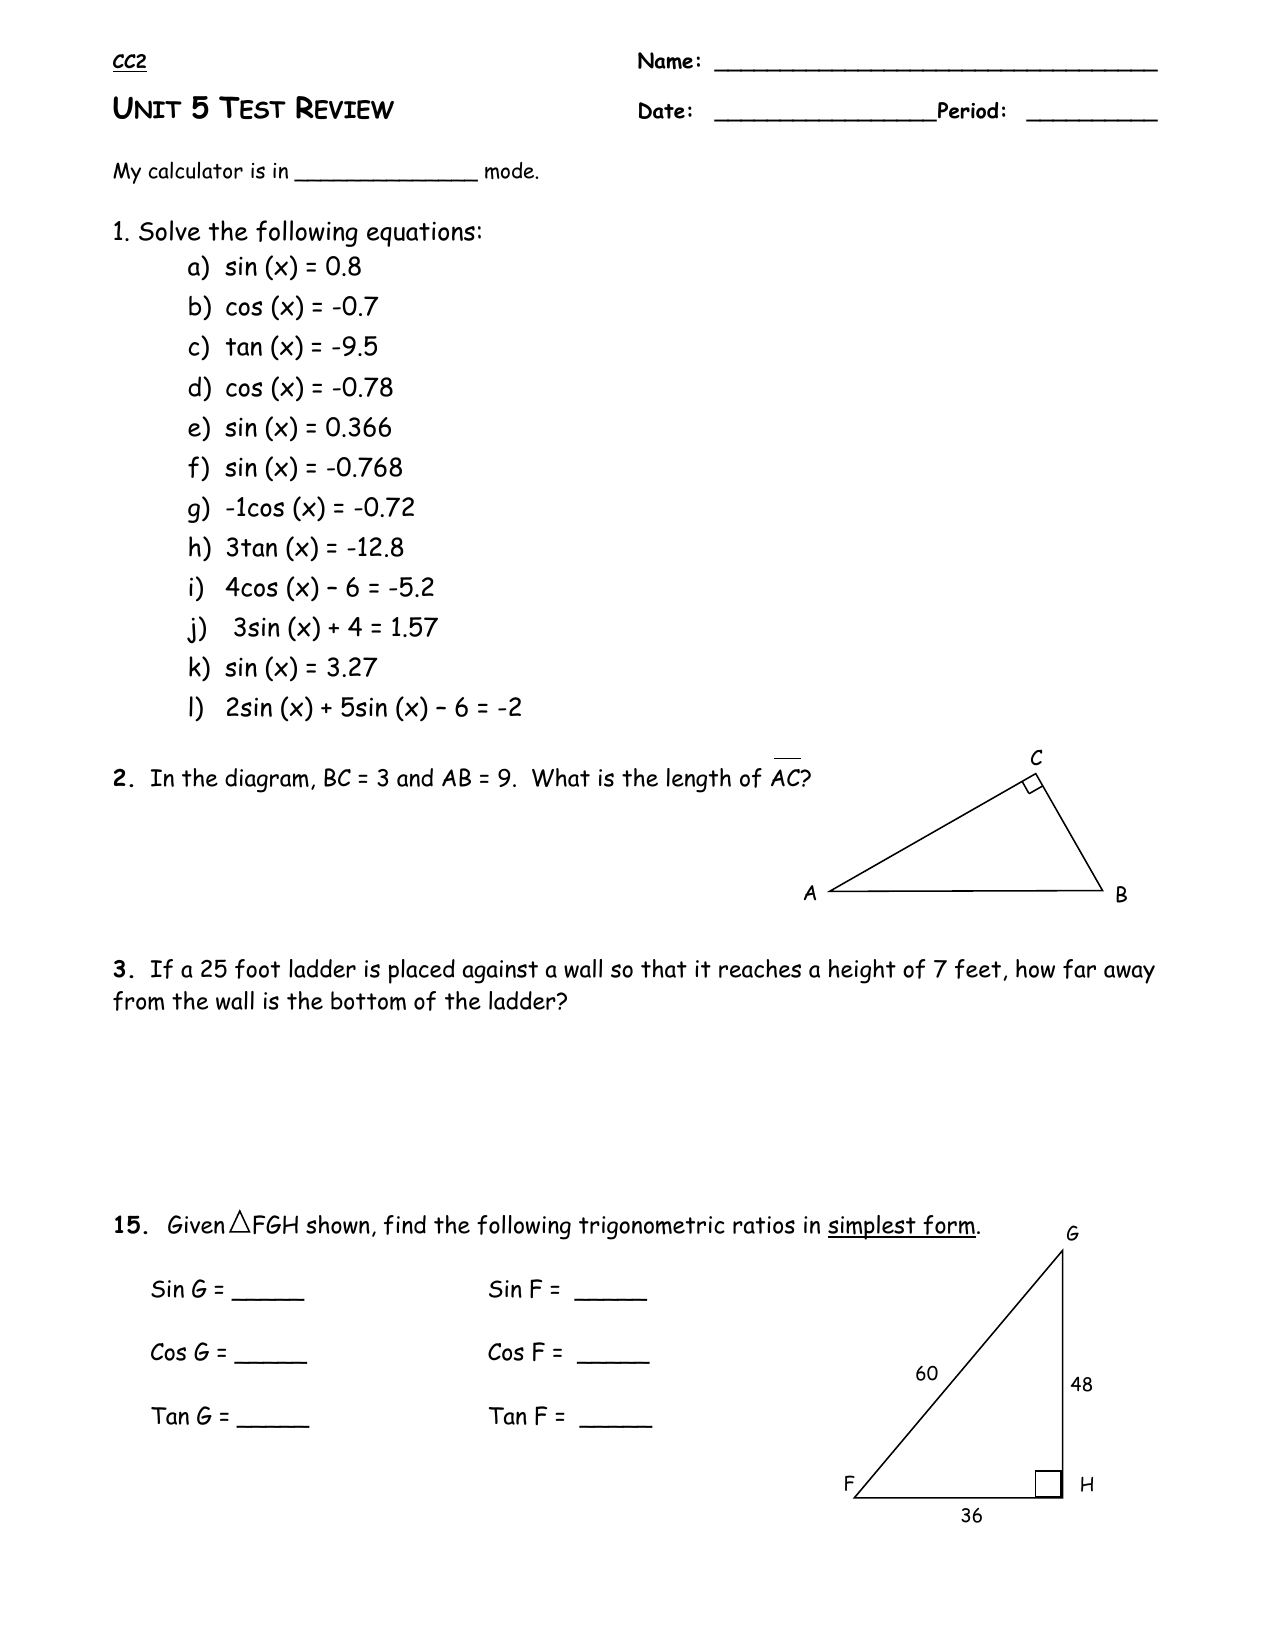 unit 5 trigonometric functions answer key homework 2